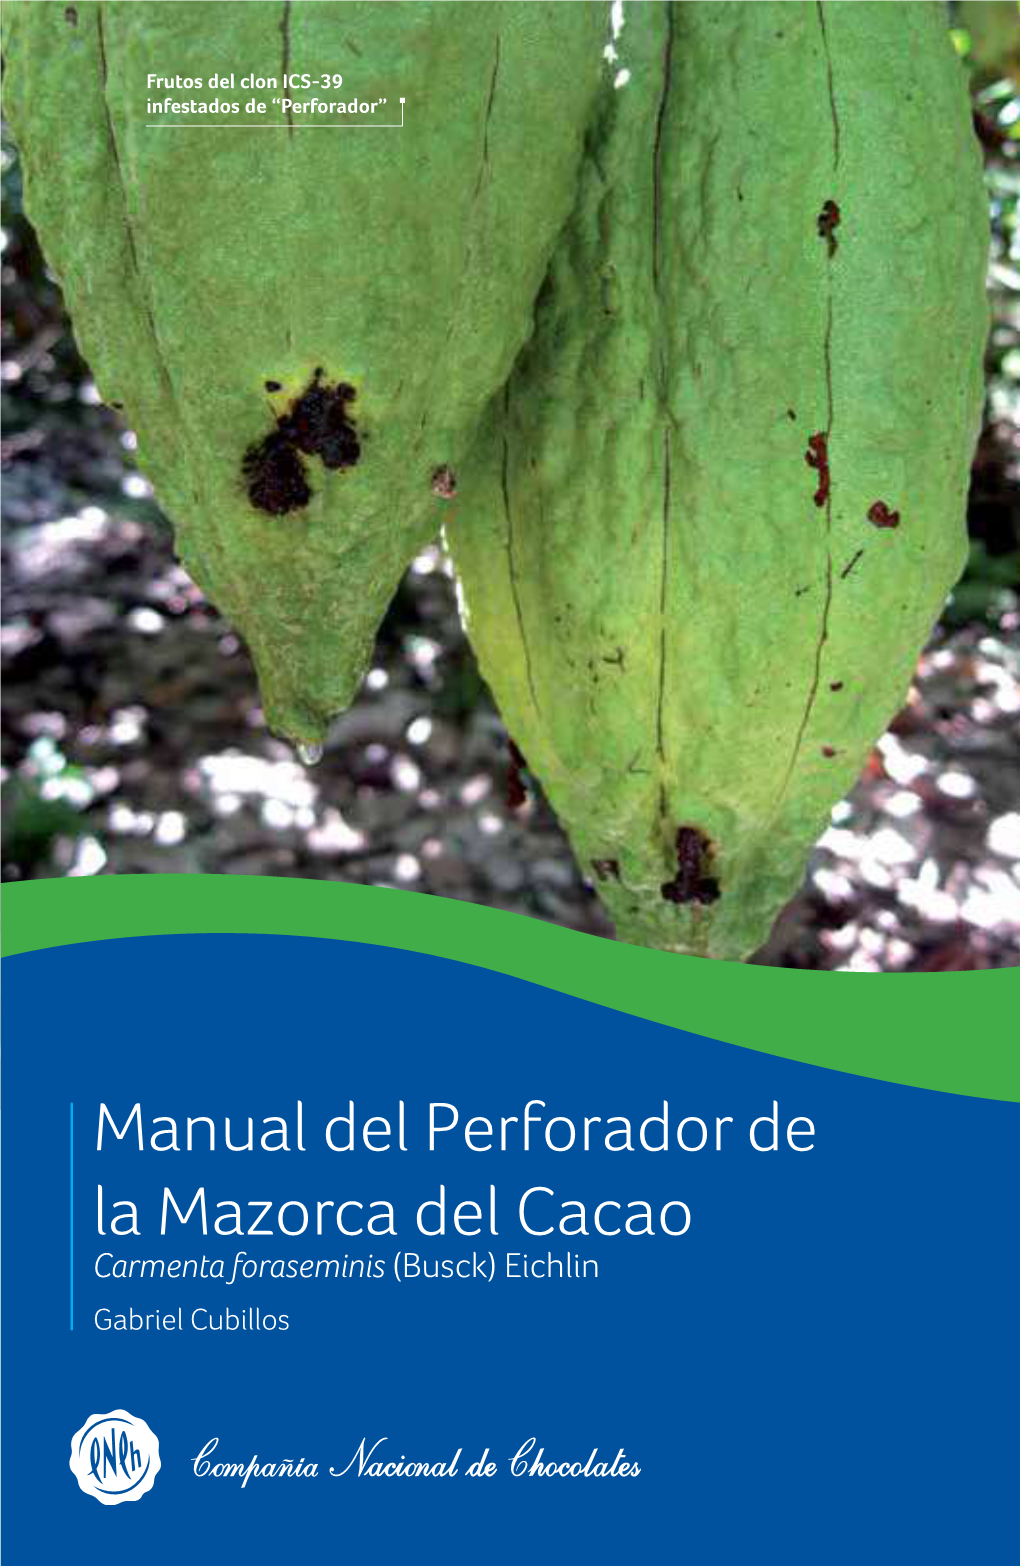 Manual Del Perforador De La Mazorca Del Cacao, Carmenta Foraseminis (Busck) Eichlin Frutos Del Clon ICS-39 Infestados De “Perforador”